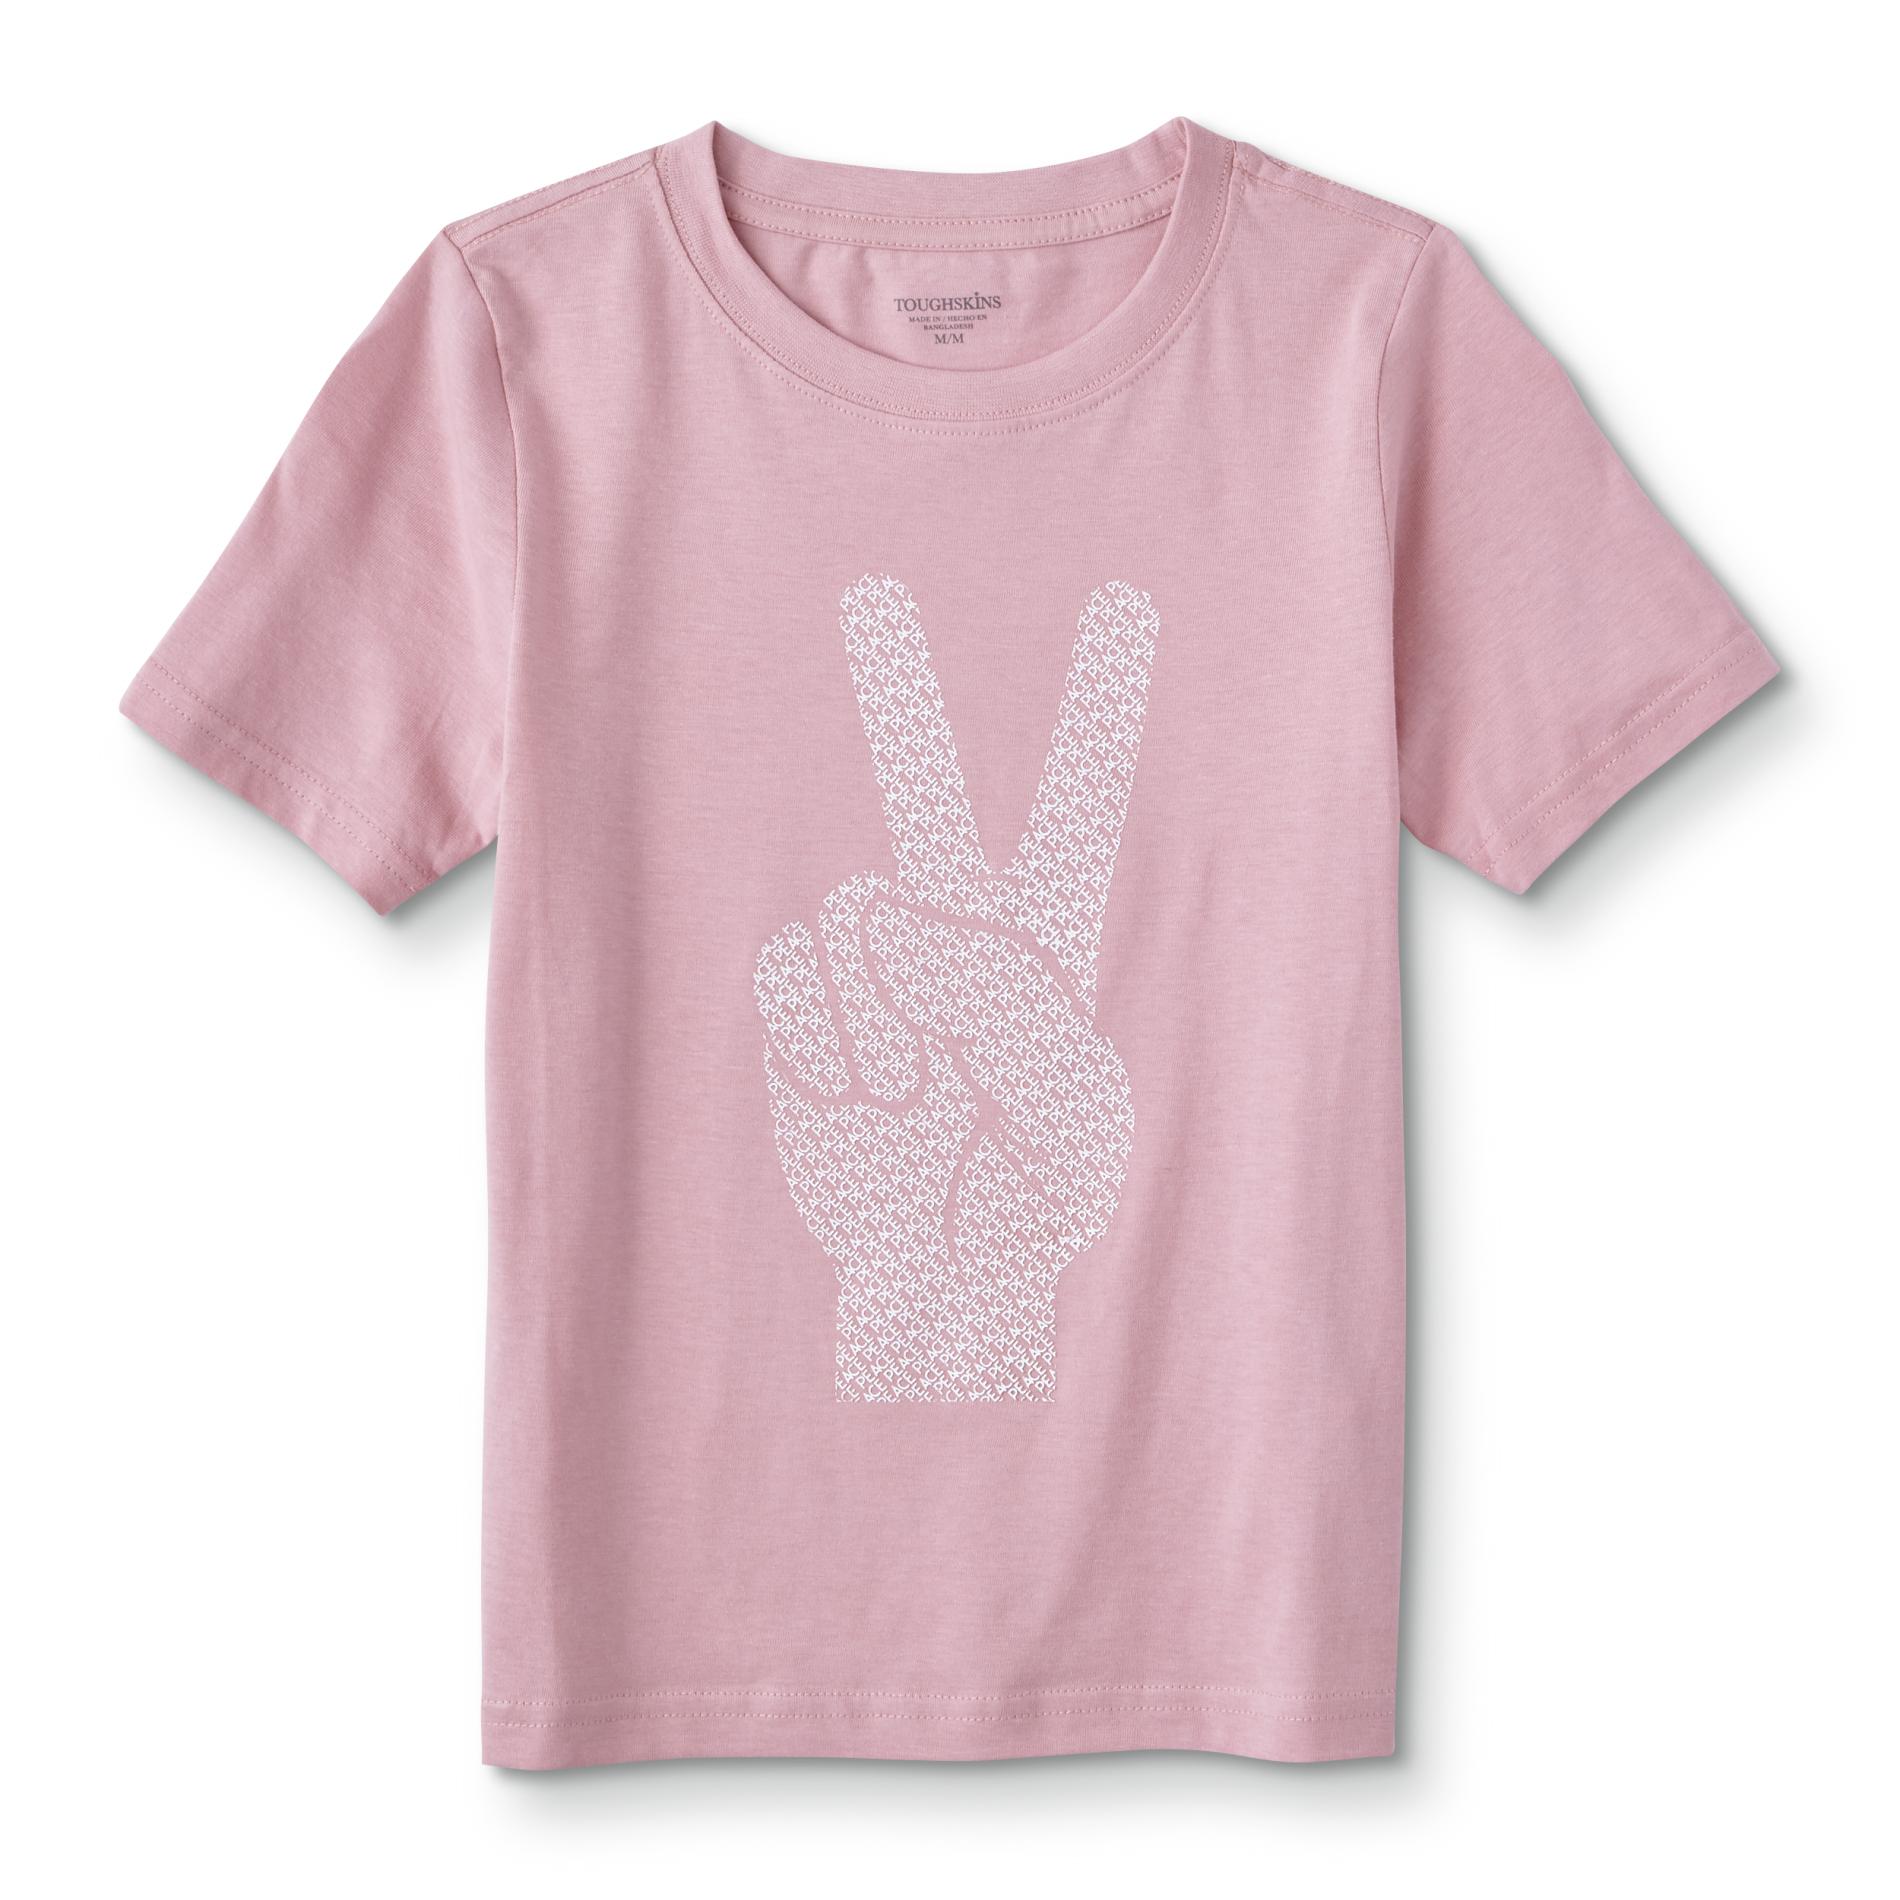 Toughskins Boys' Graphic T-Shirt - Peace